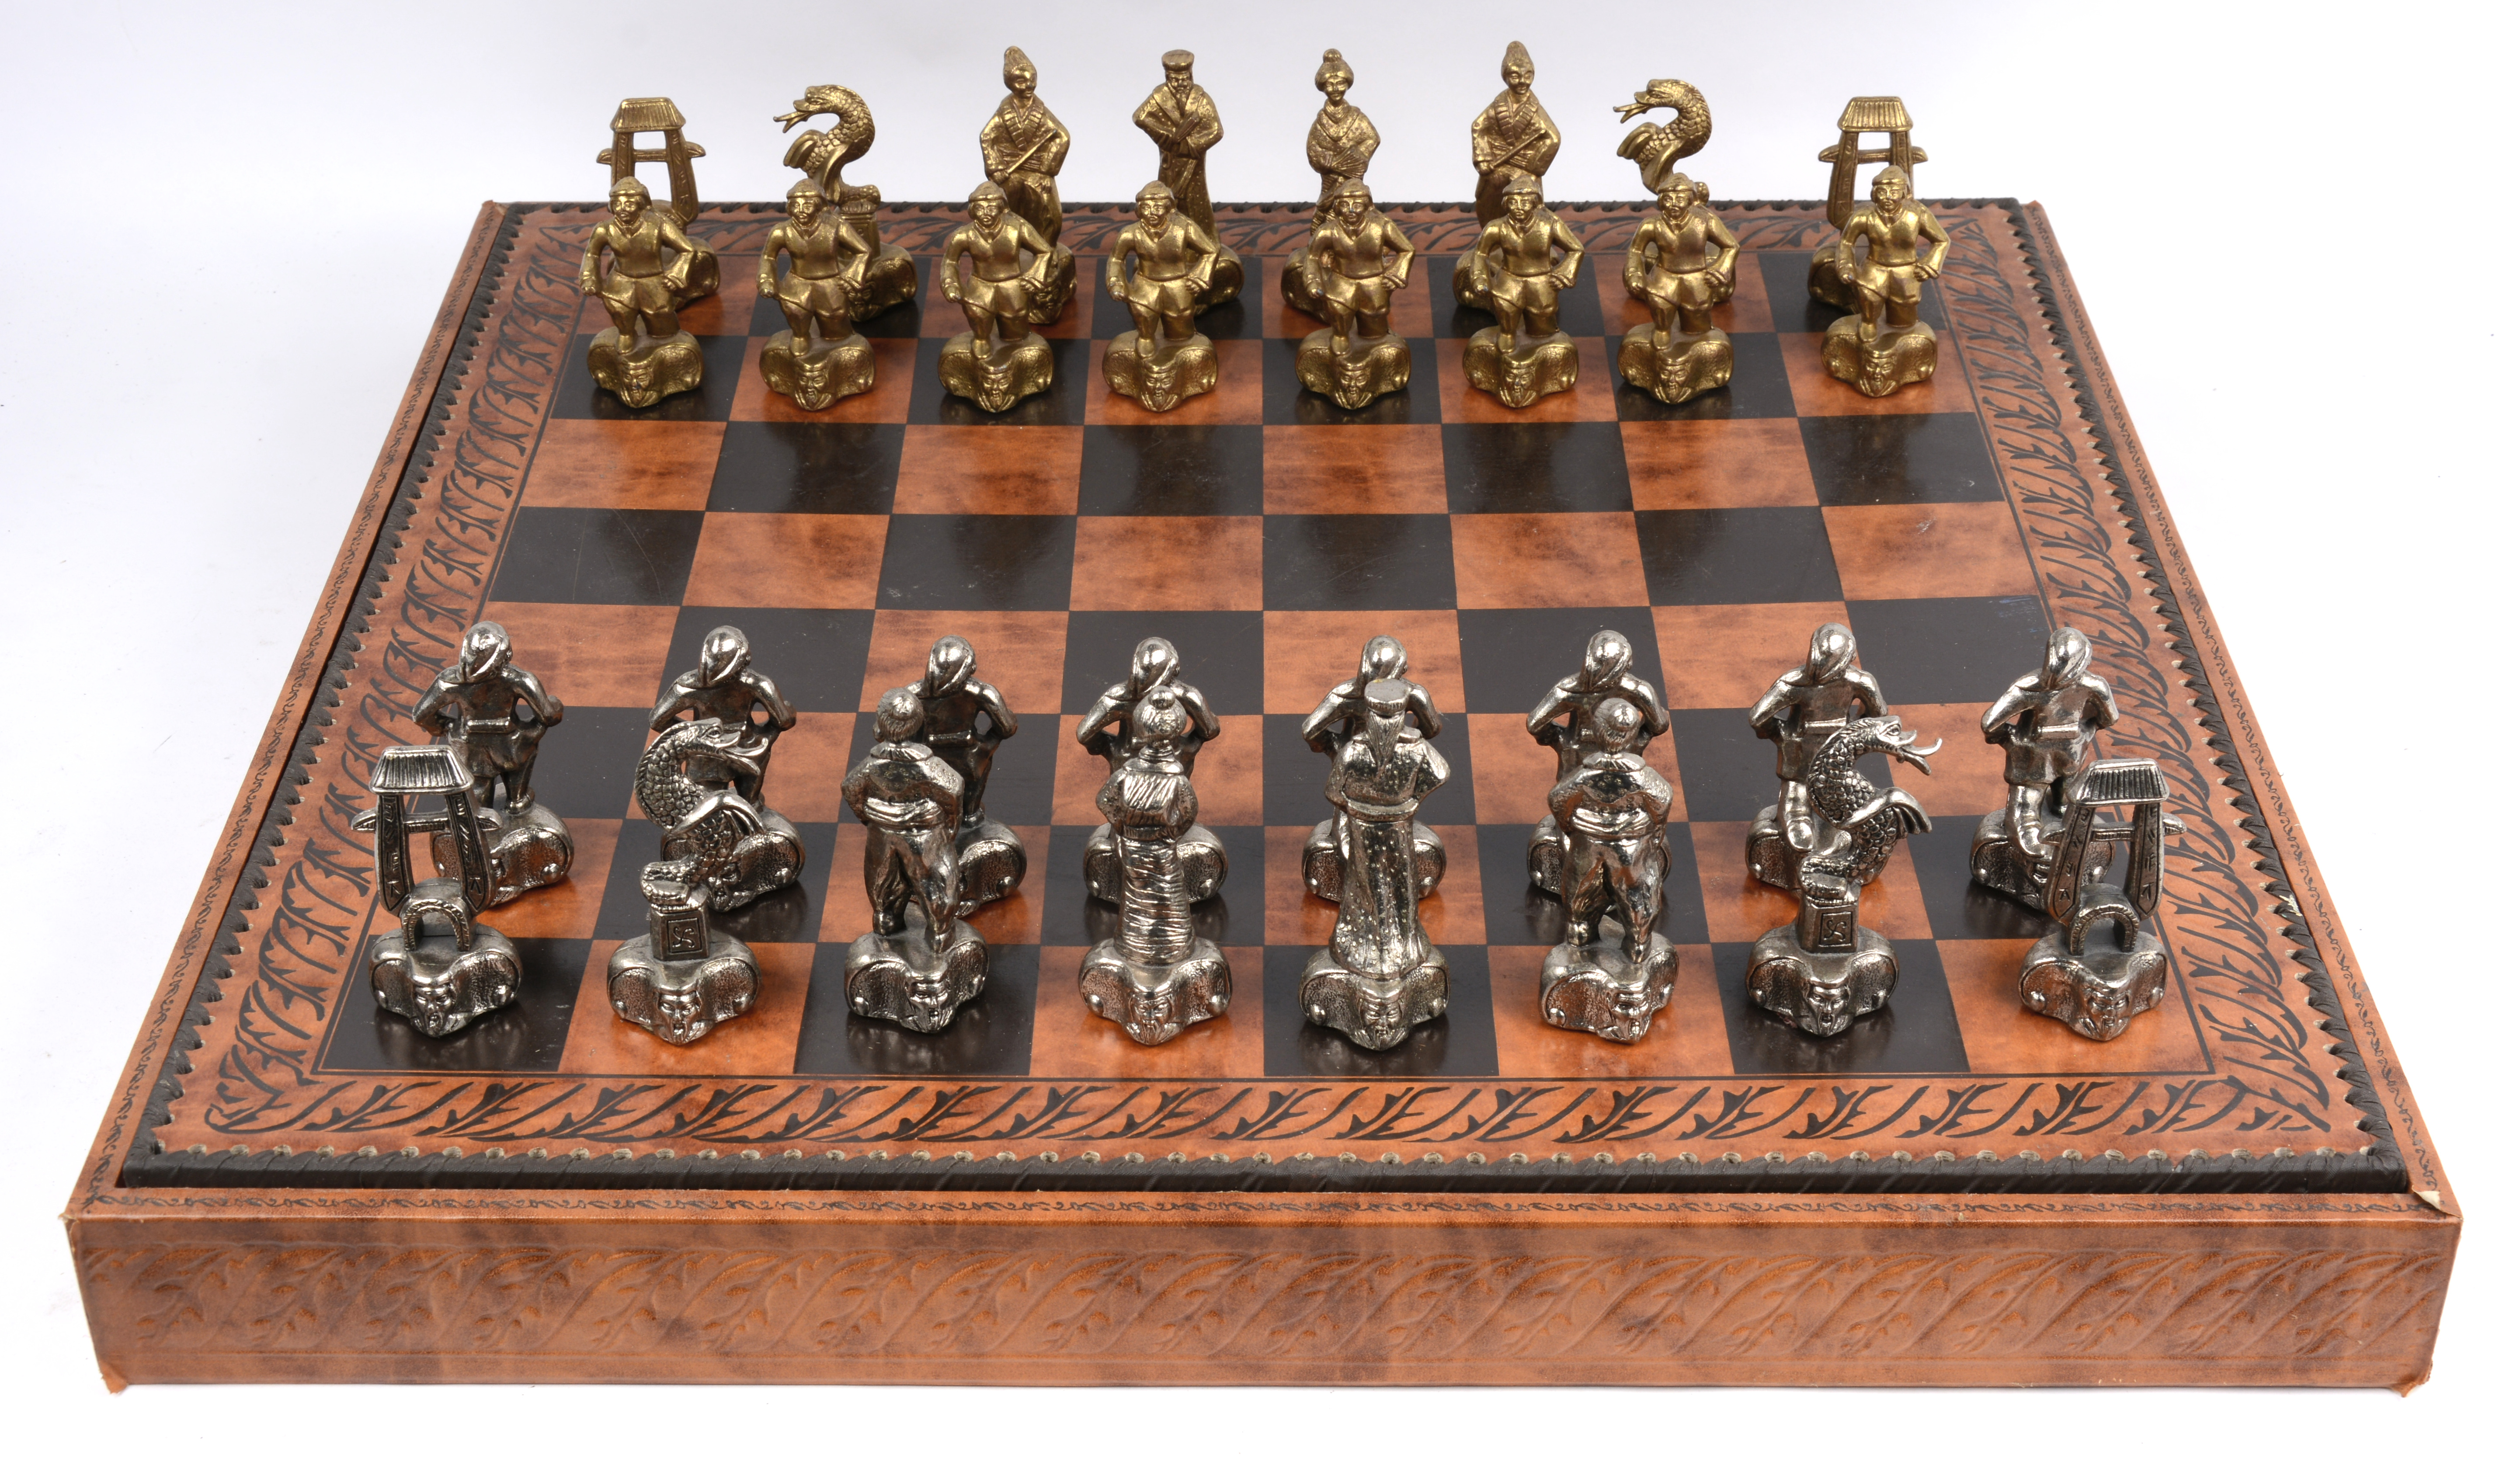 leder bekleed schaakbord met metalen stukken. – Jordaens N.V. Veilinghuis